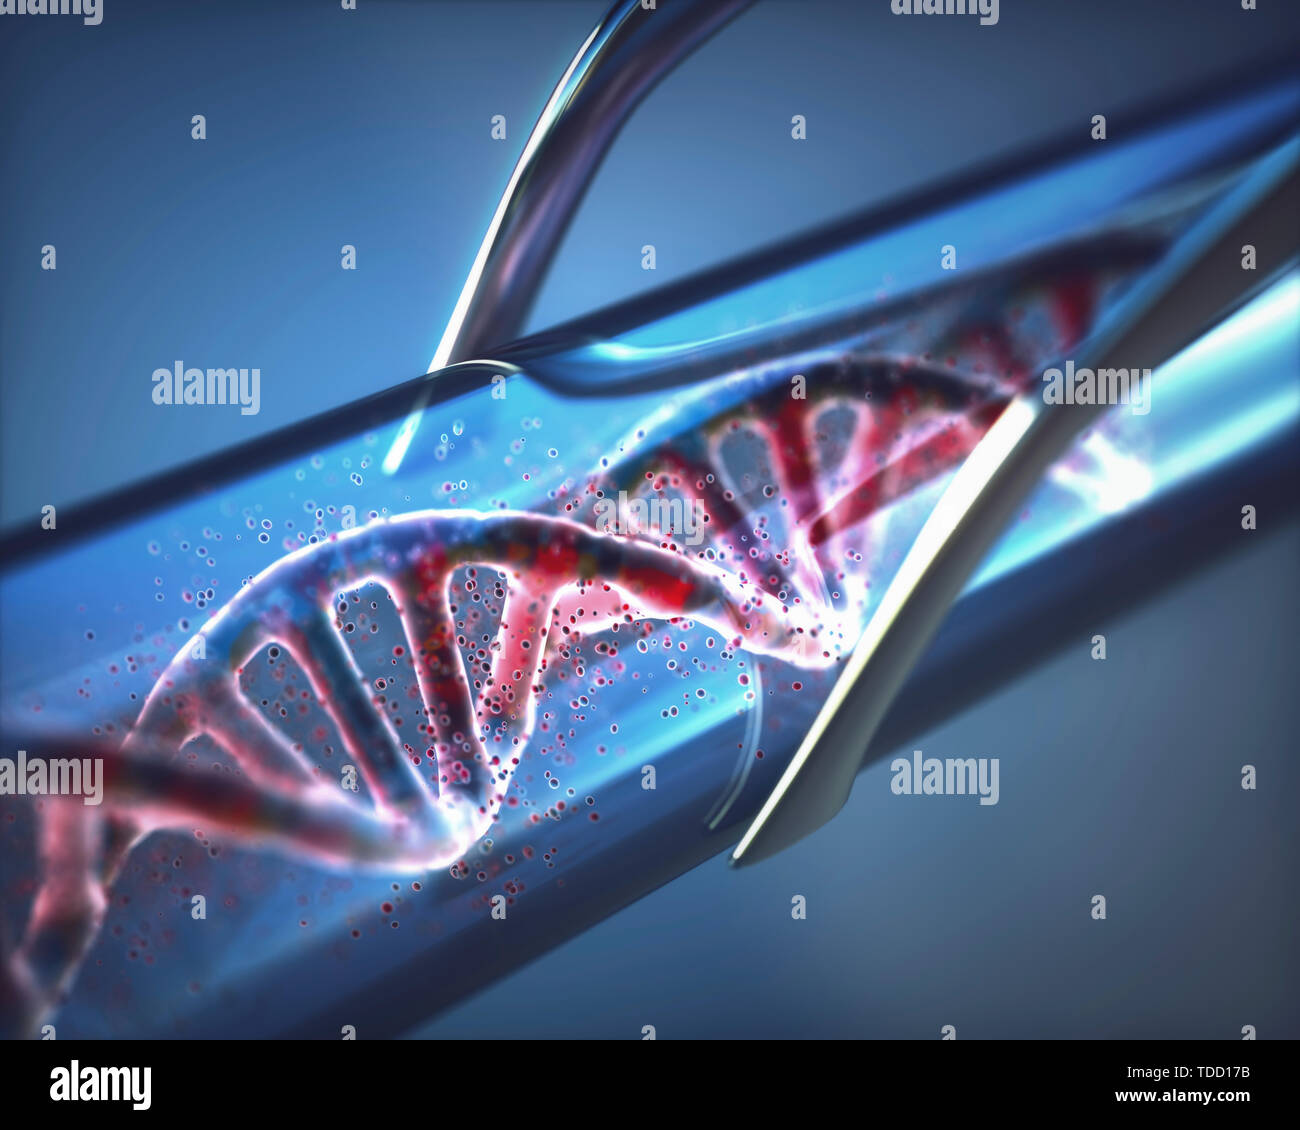 Genetic engineering, conceptual illustration Stock Photo